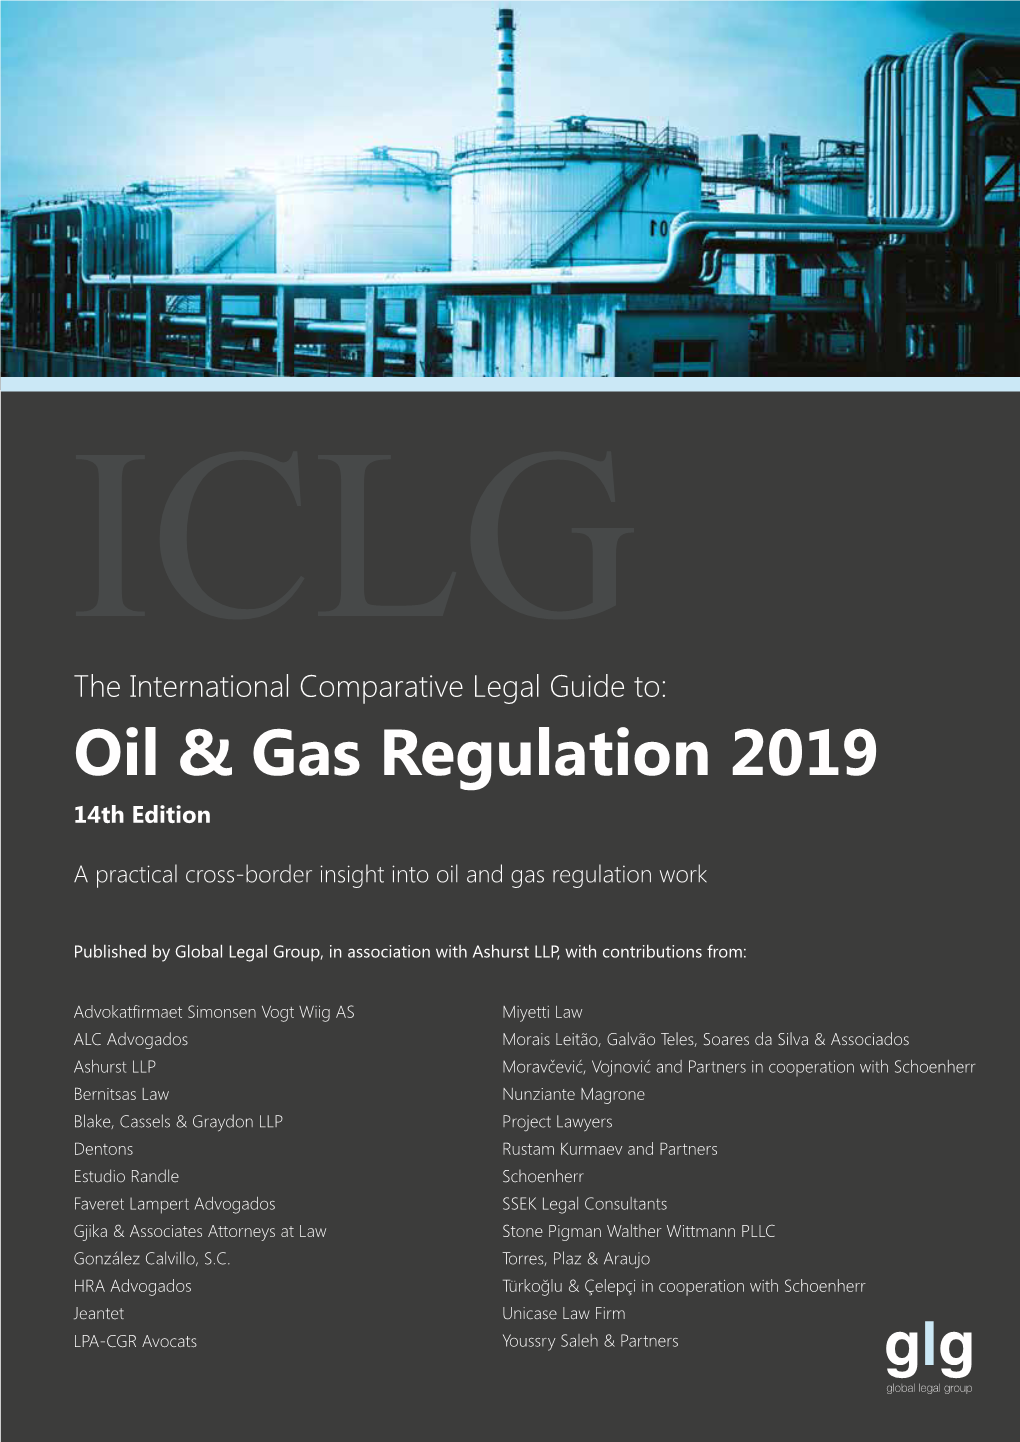 Oil & Gas Regulation 2019